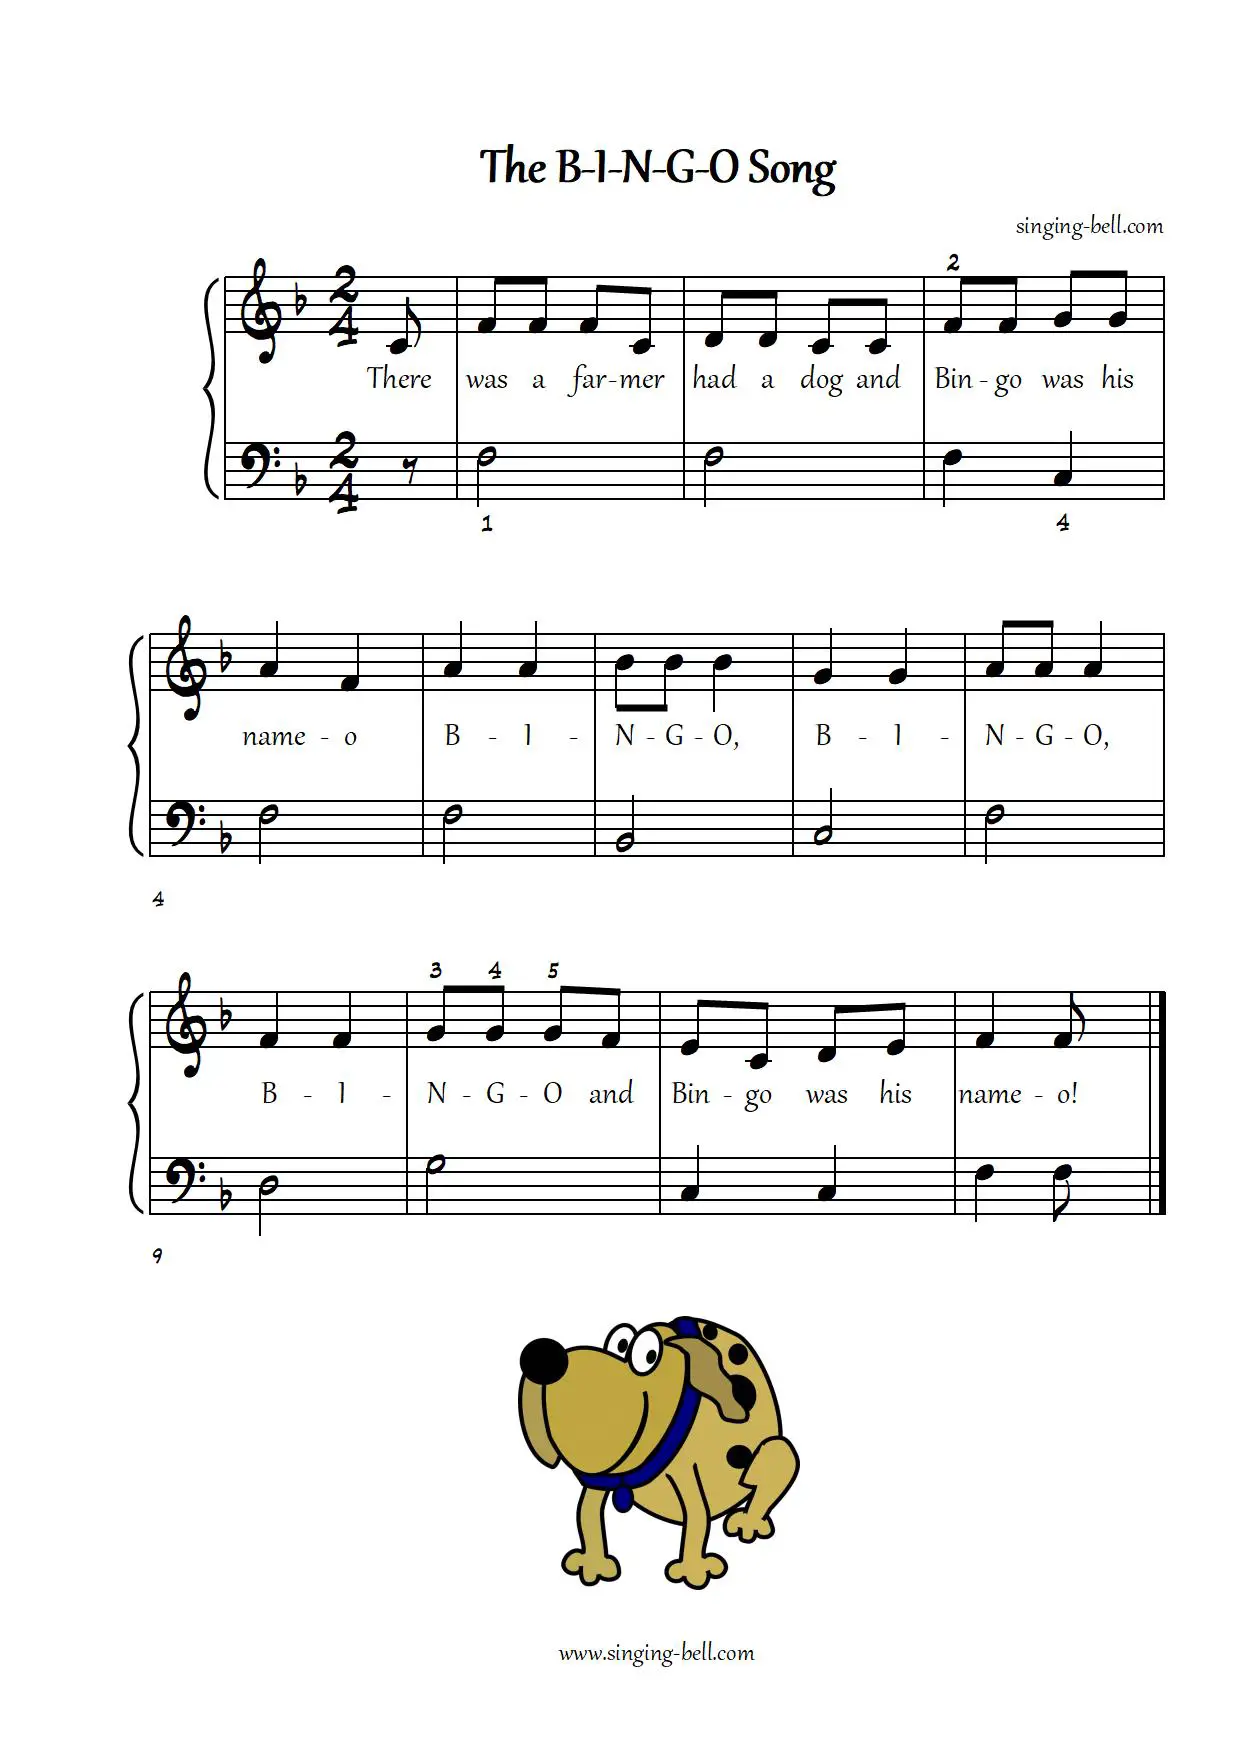 Bingo Song easy piano sheet music notes beginners pdf